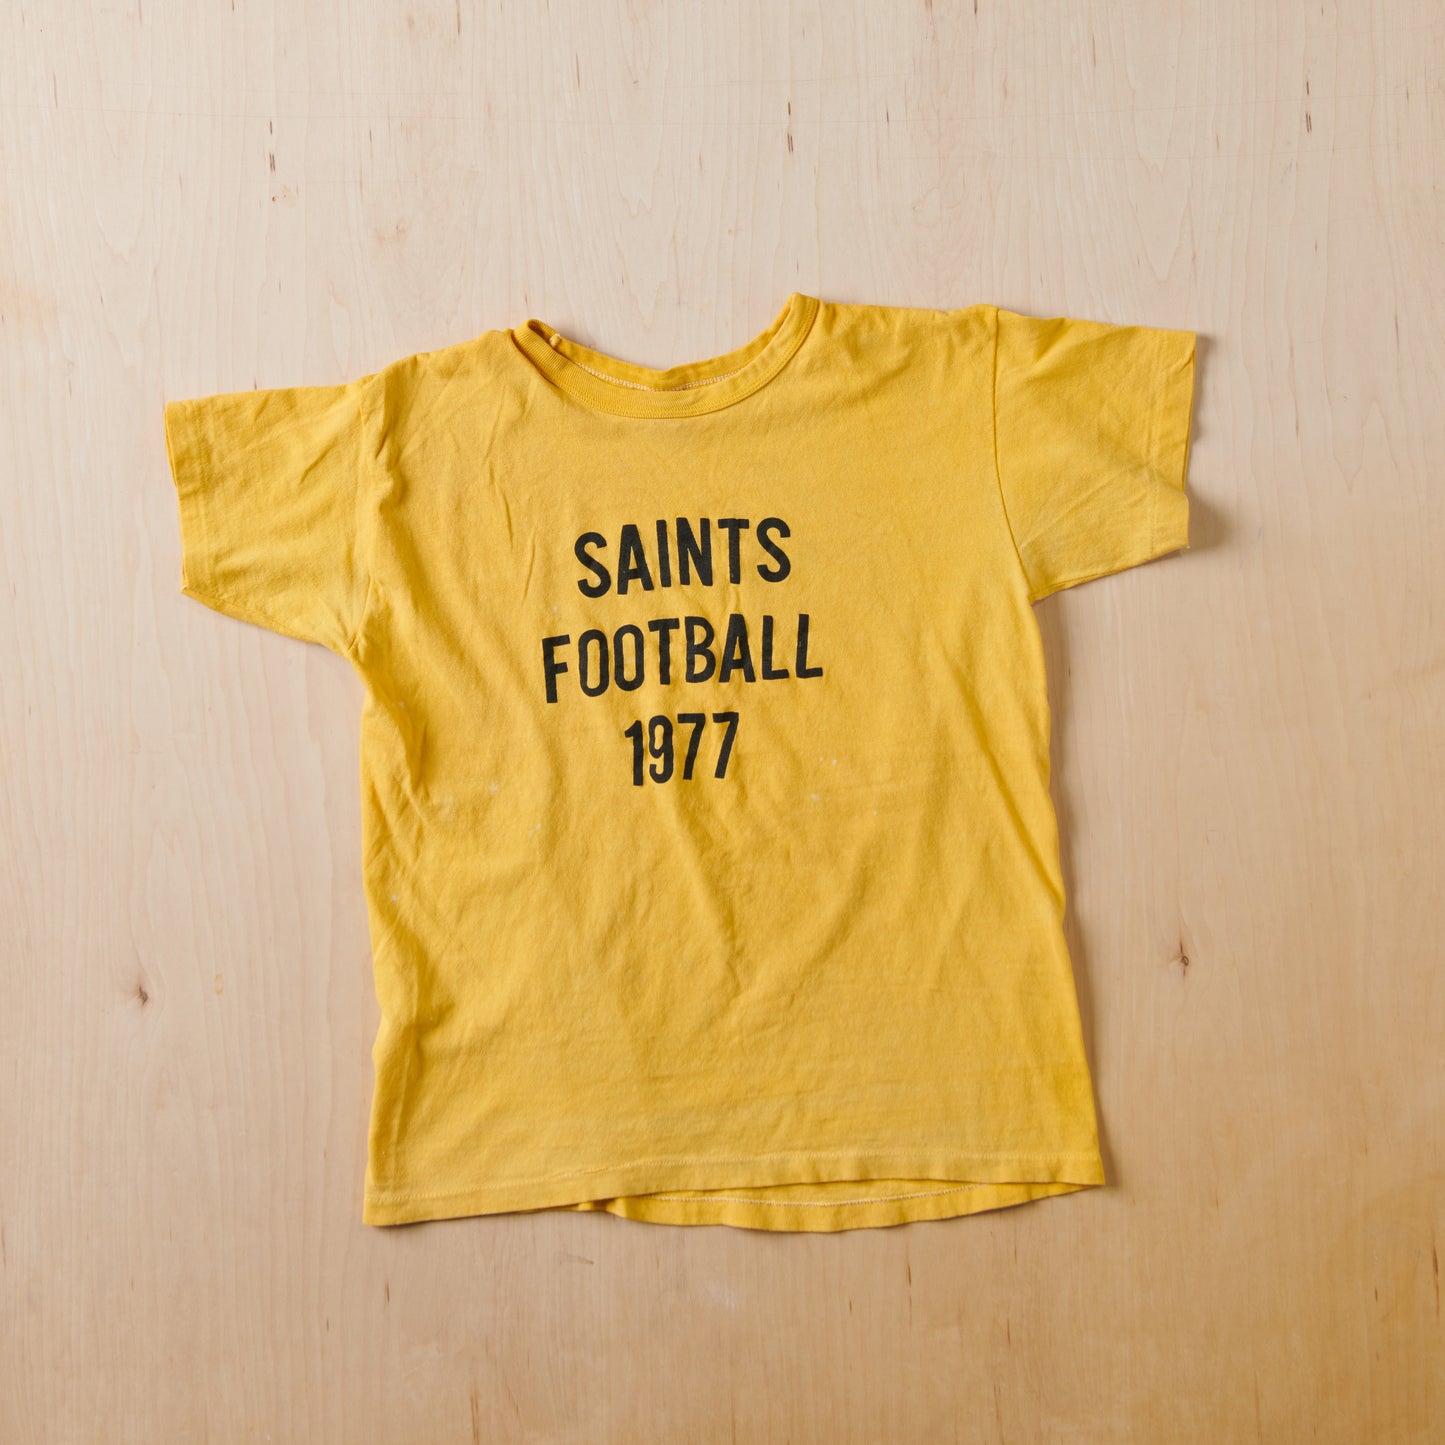 Saints Footballl Tee